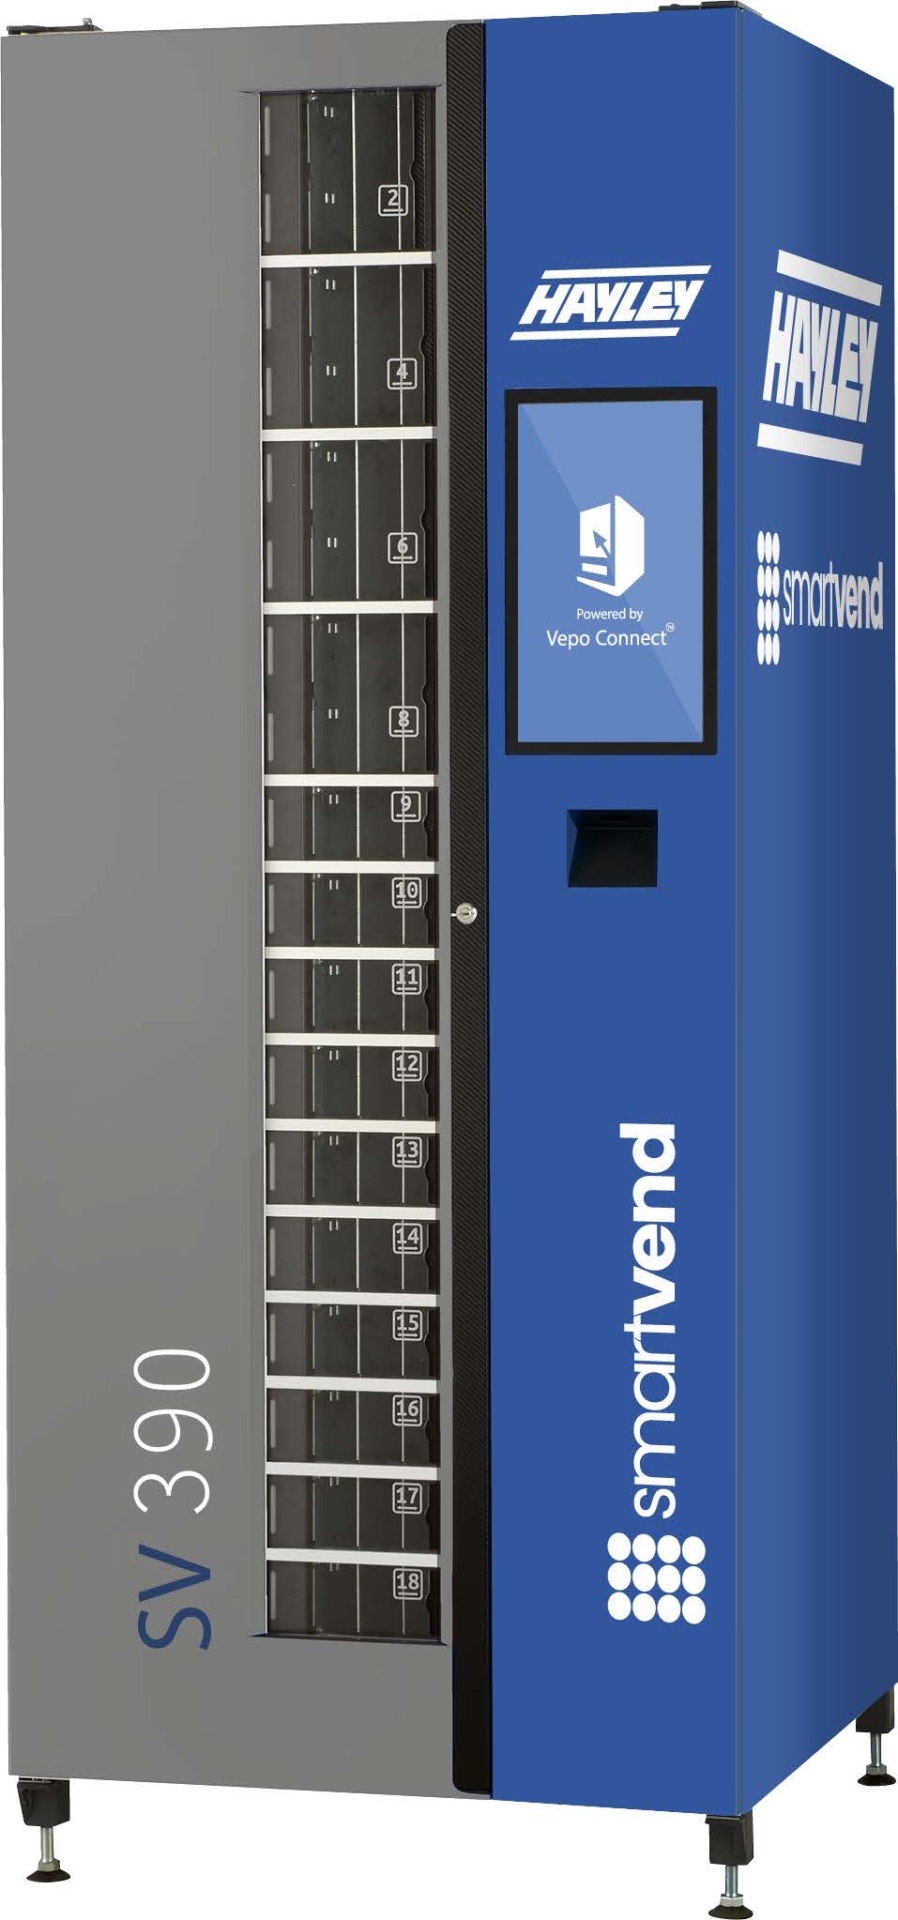 SmartVend SV390 industrial vending machines